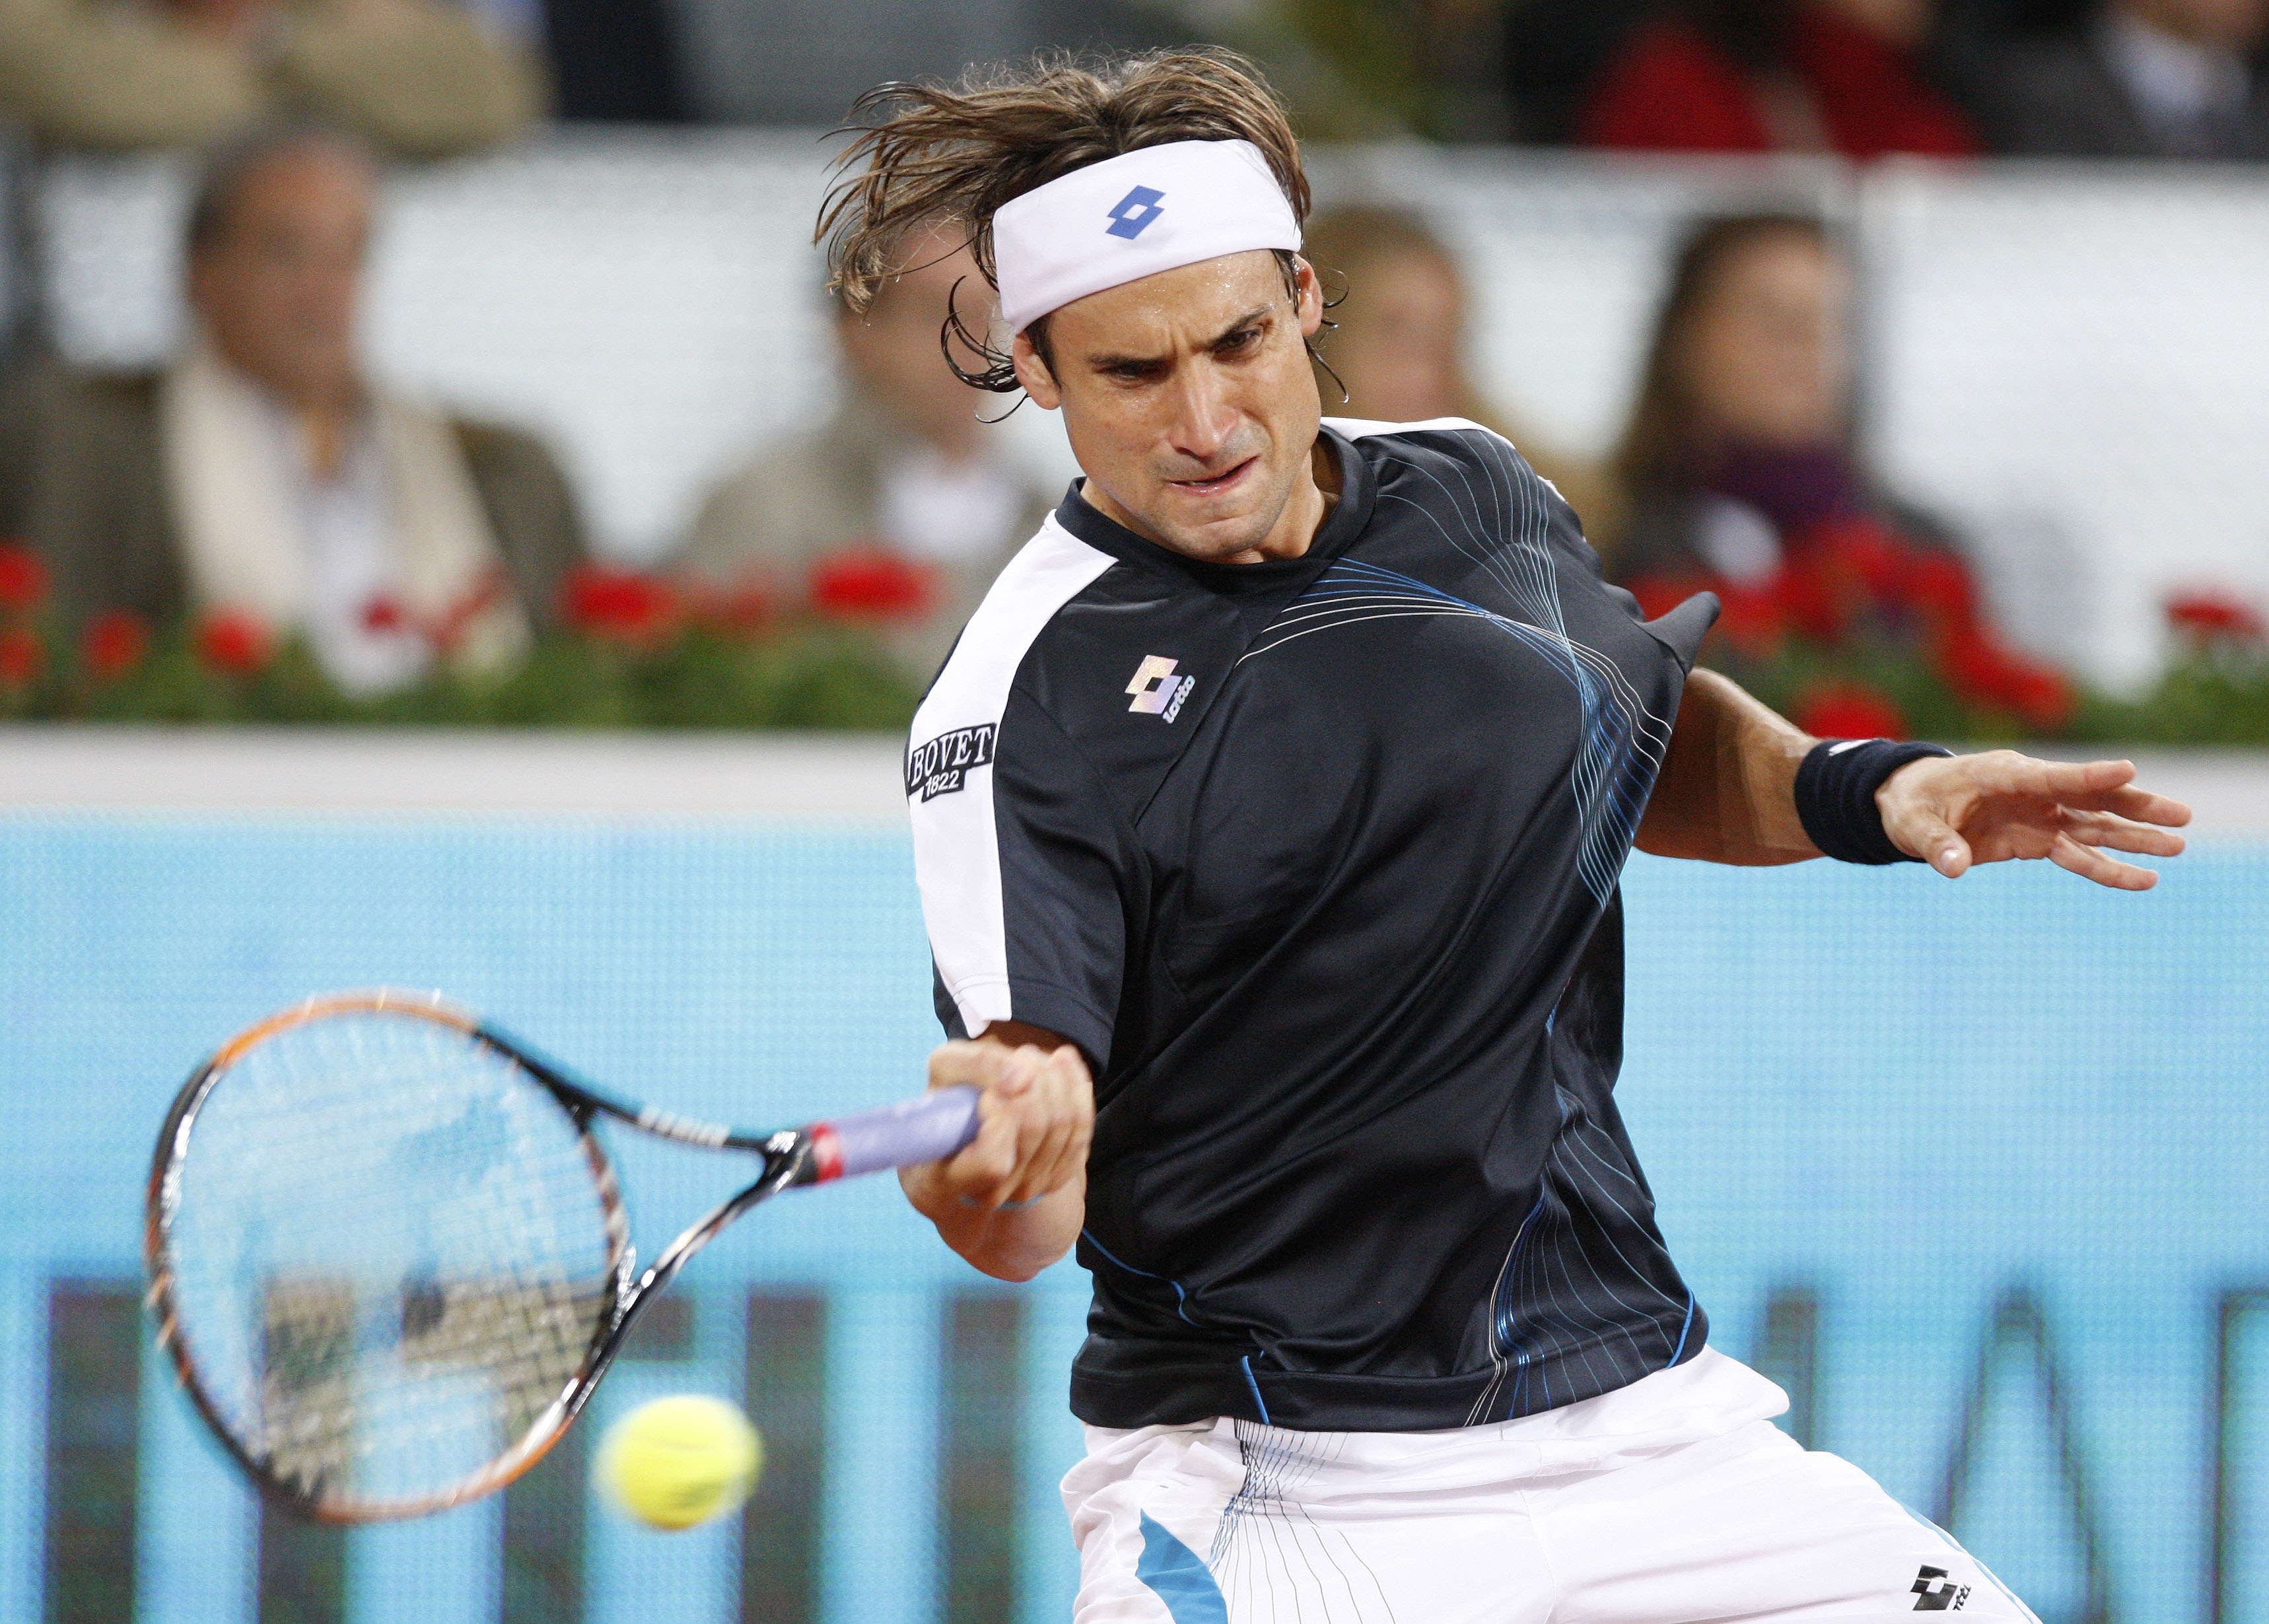 ATP, David Ferrer, Tennis, Roger Federer